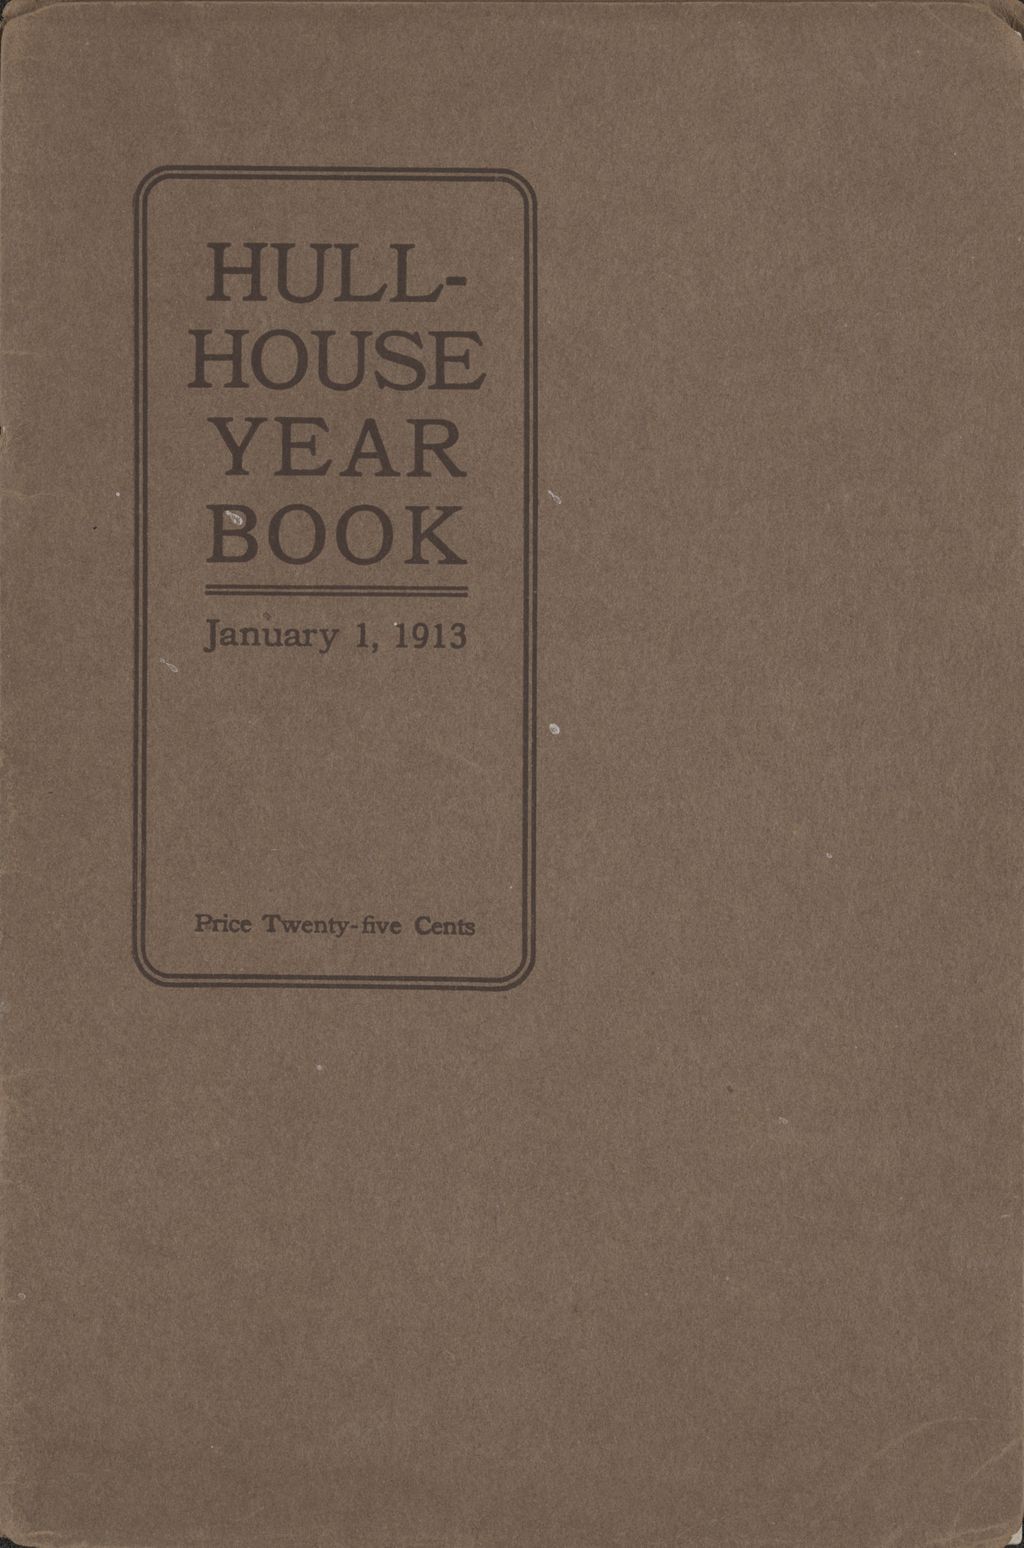 Hull-House Year Book, 1913